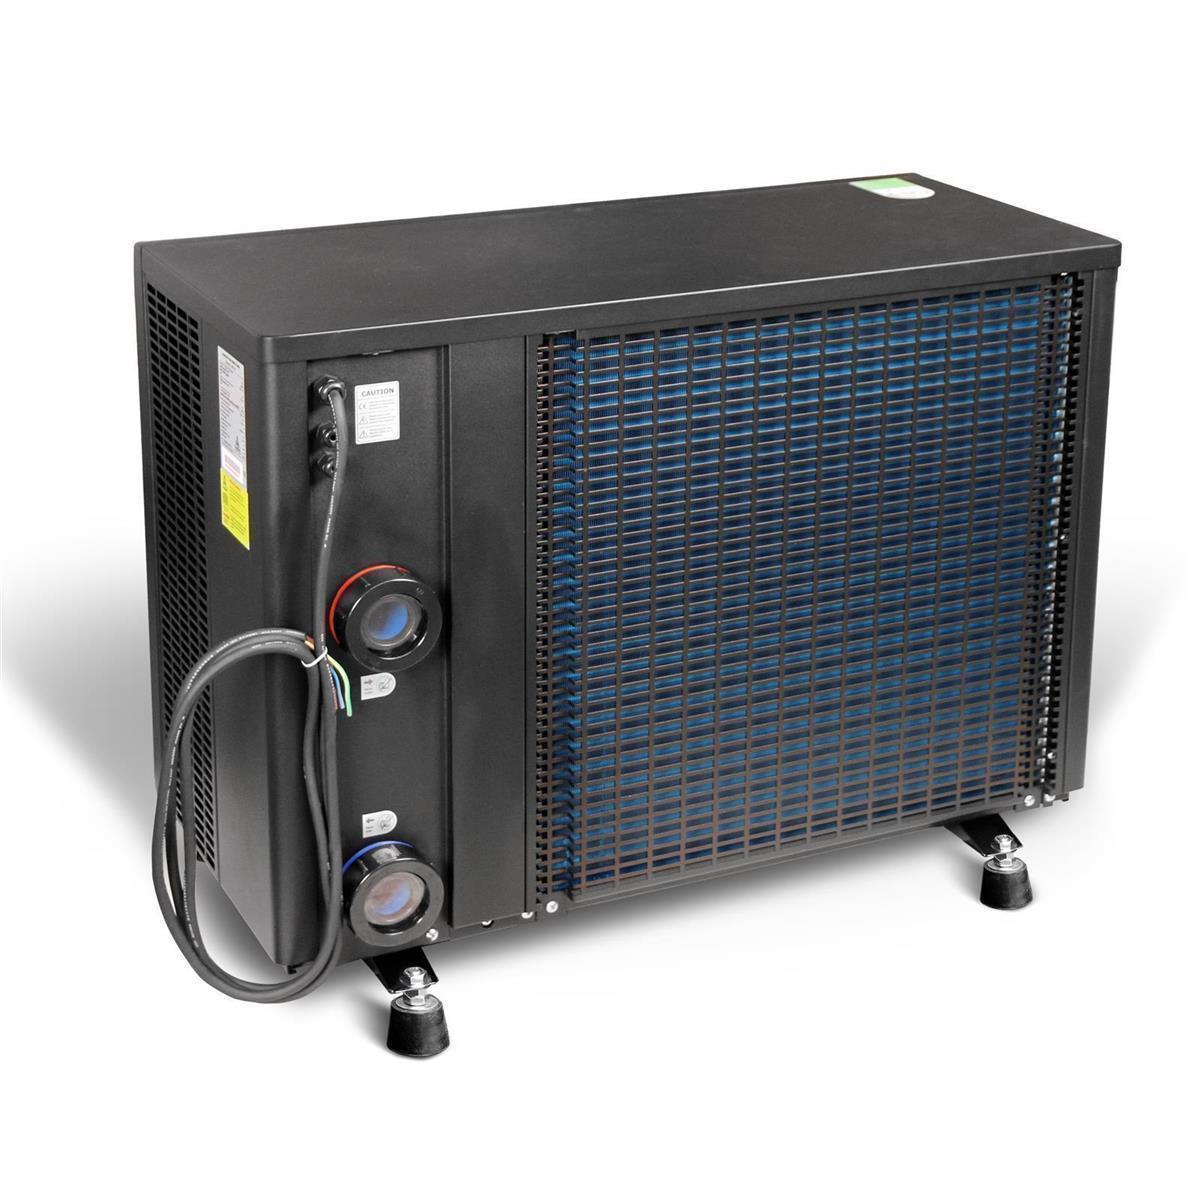 Full-Inverter Wärmepumpe AquaSilence 90 bis 9kW